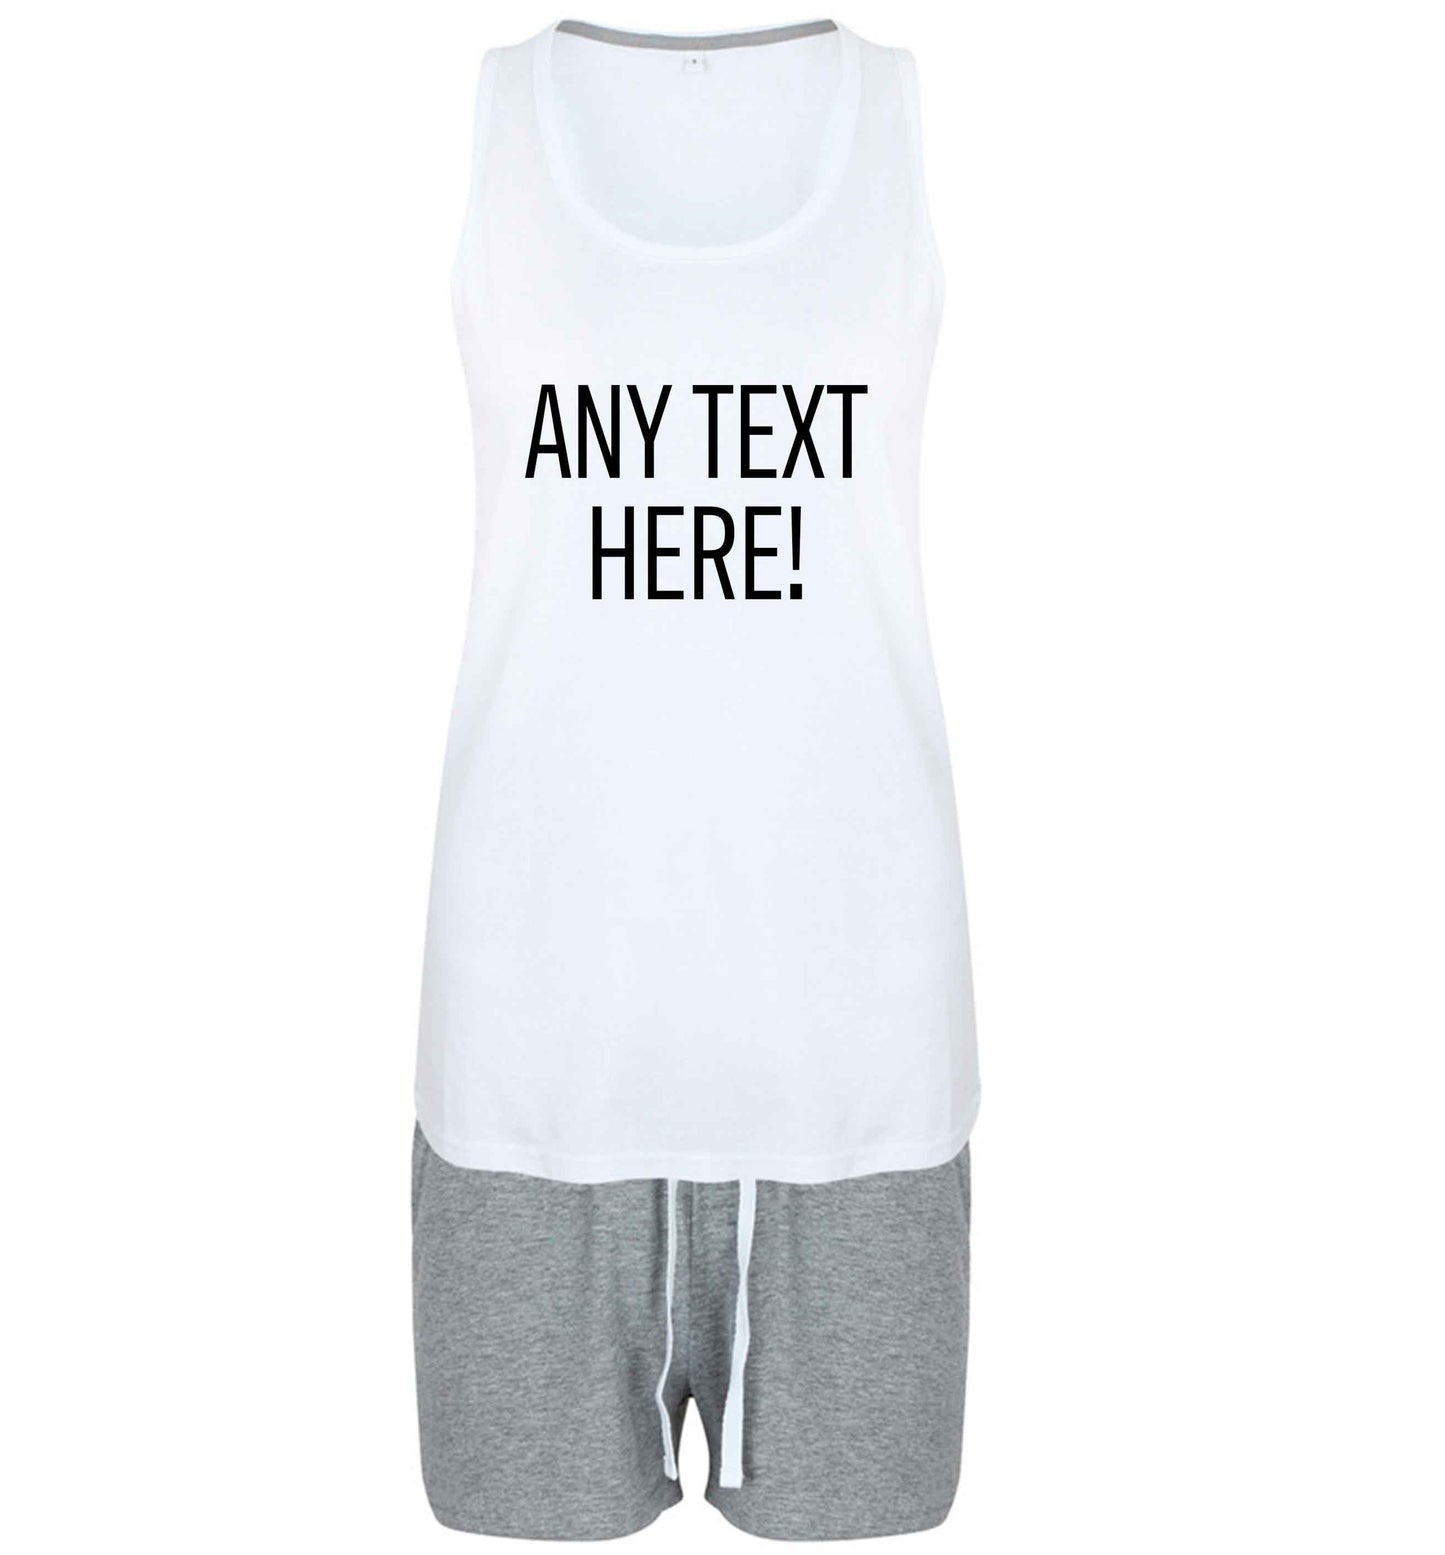 Any text here size XL women's pyjama shorts set in grey